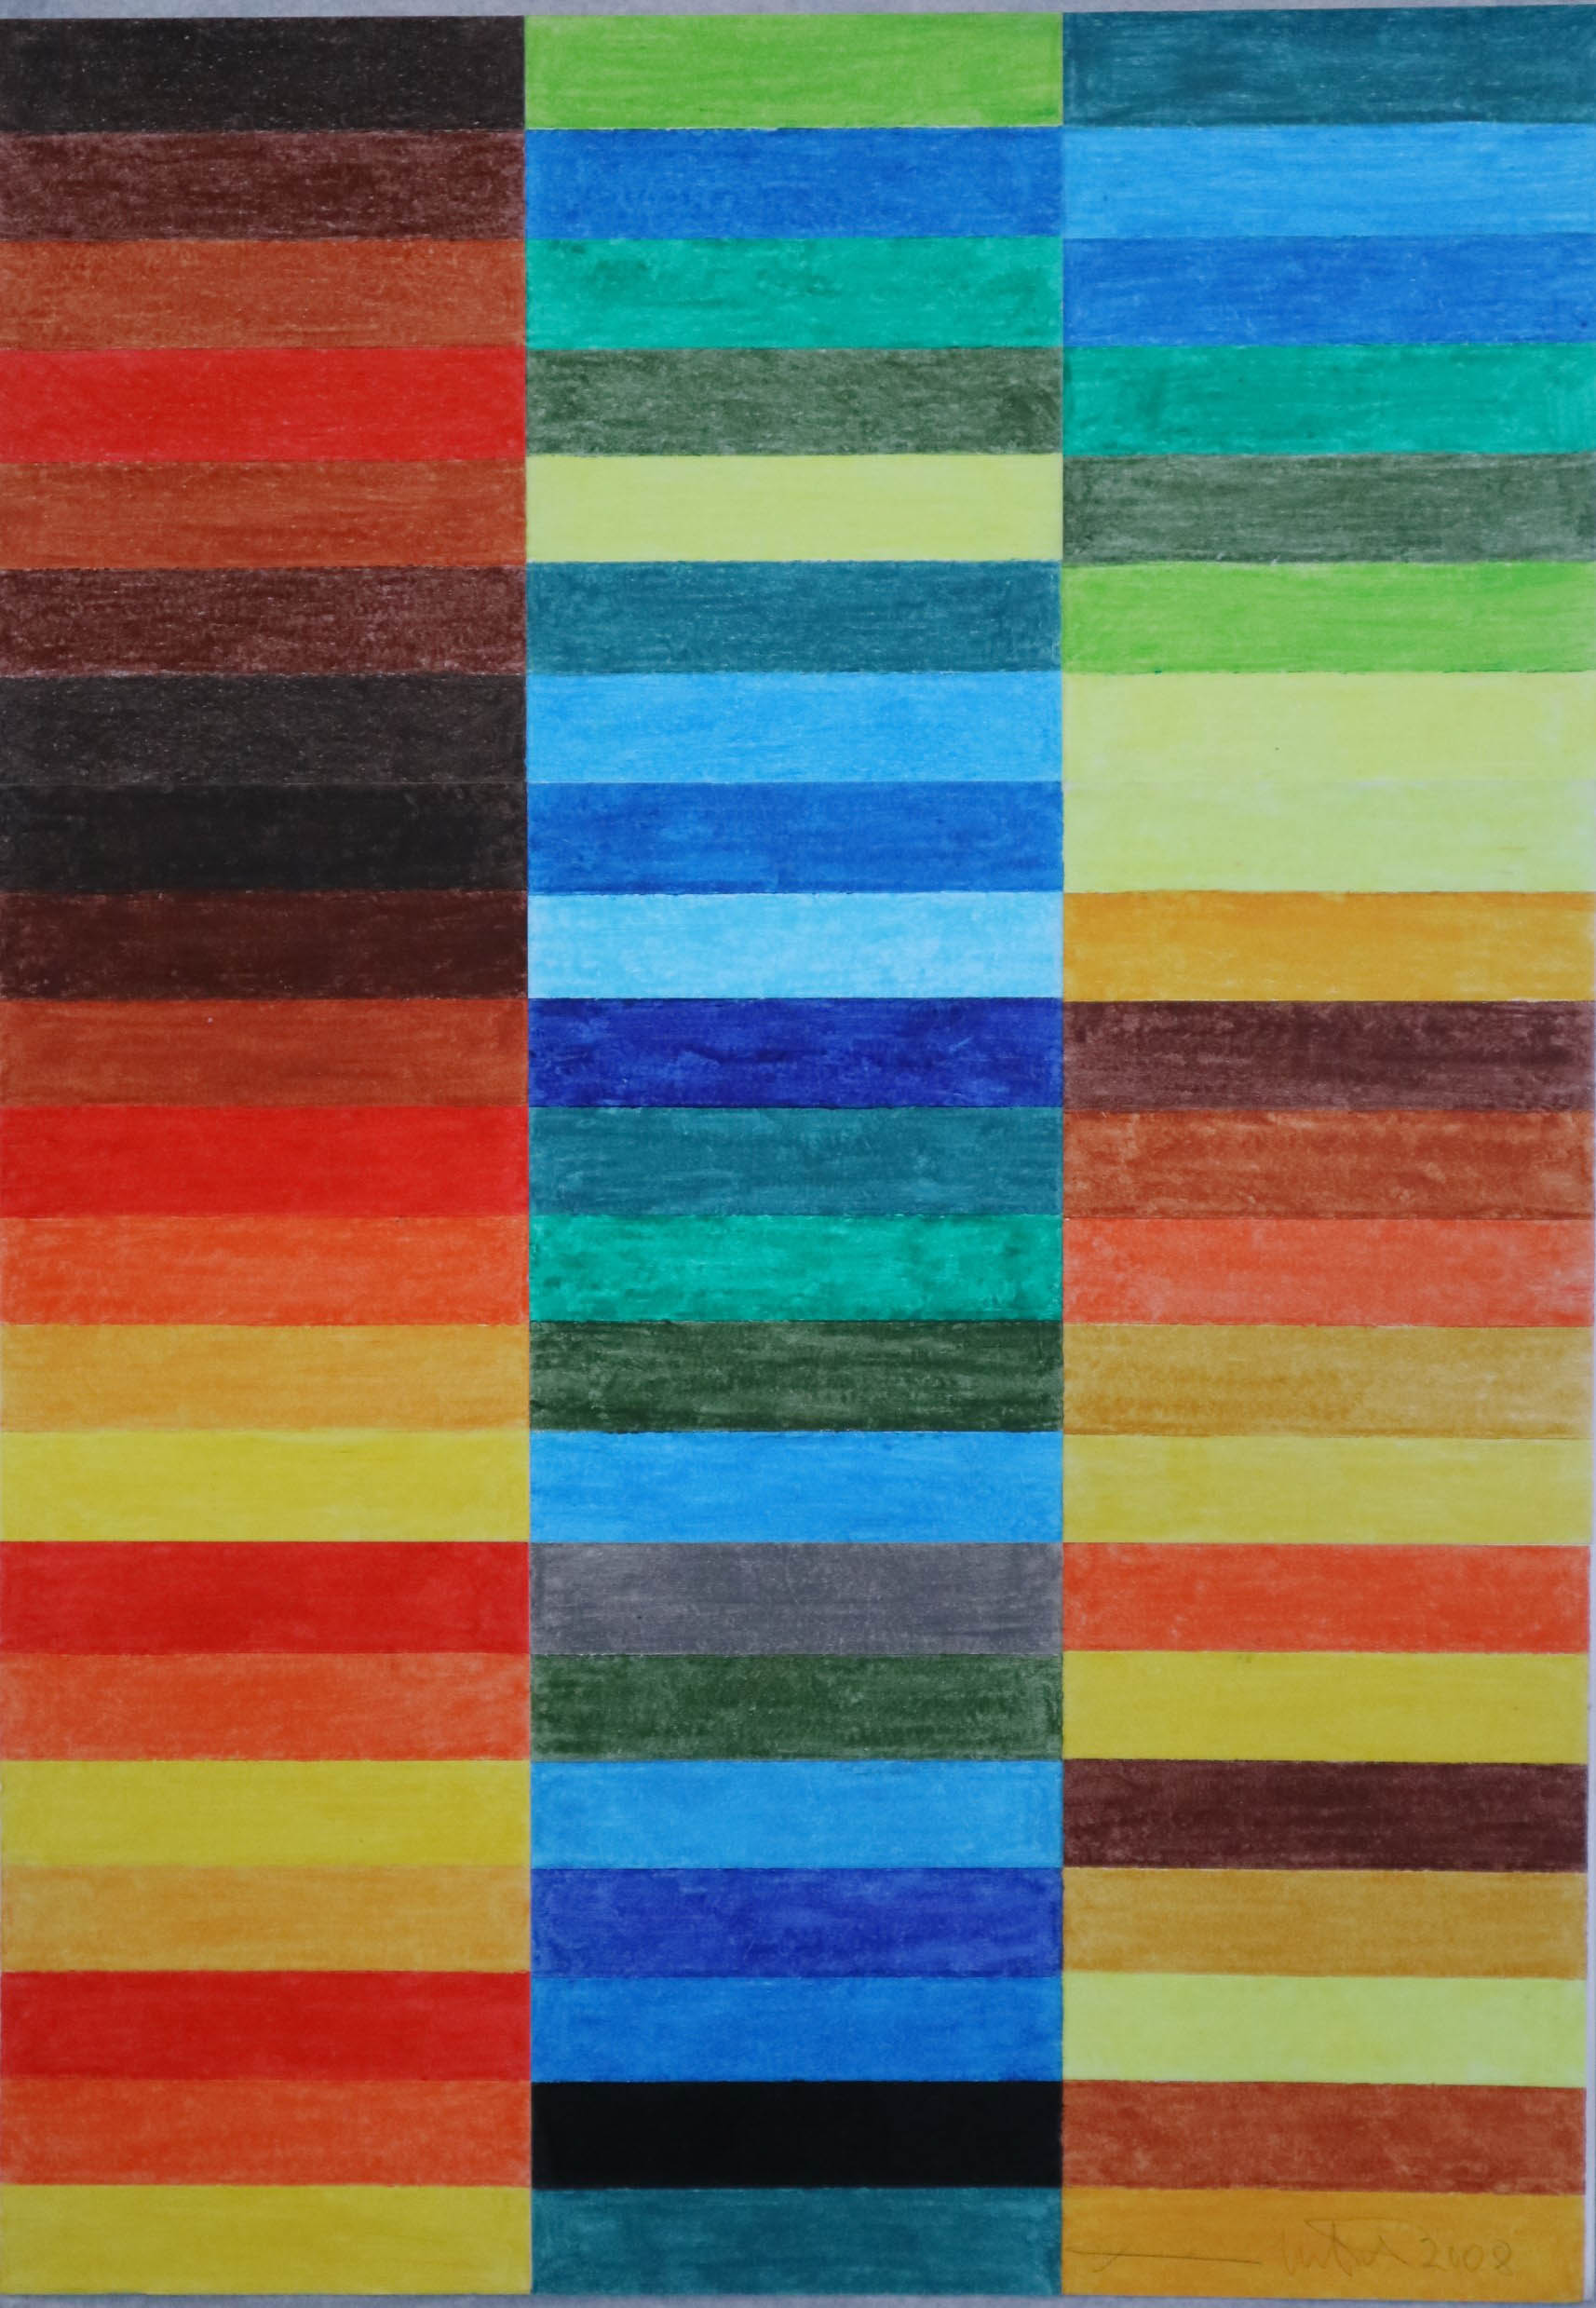 Teoria dei colori 16 (disegno) di Nitsch, Hermann - Fondazione Morra (sec. XXI)